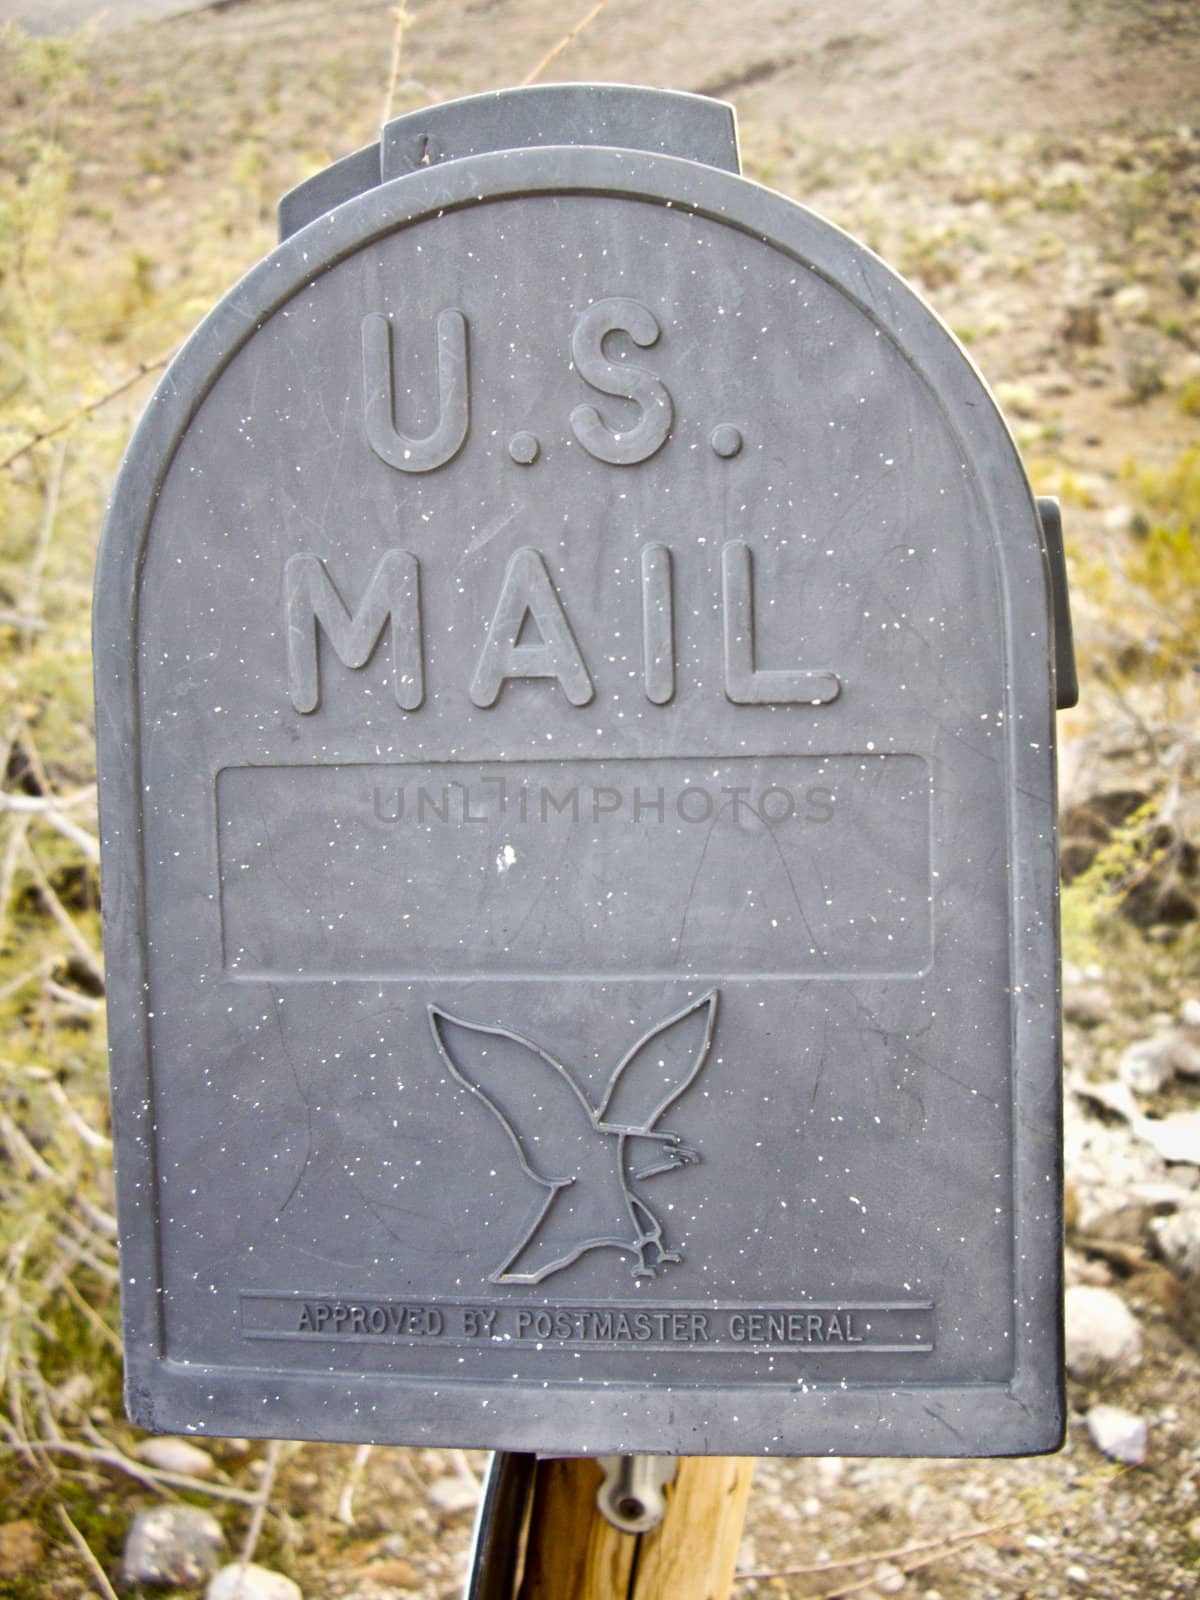 Mail Box by emattil